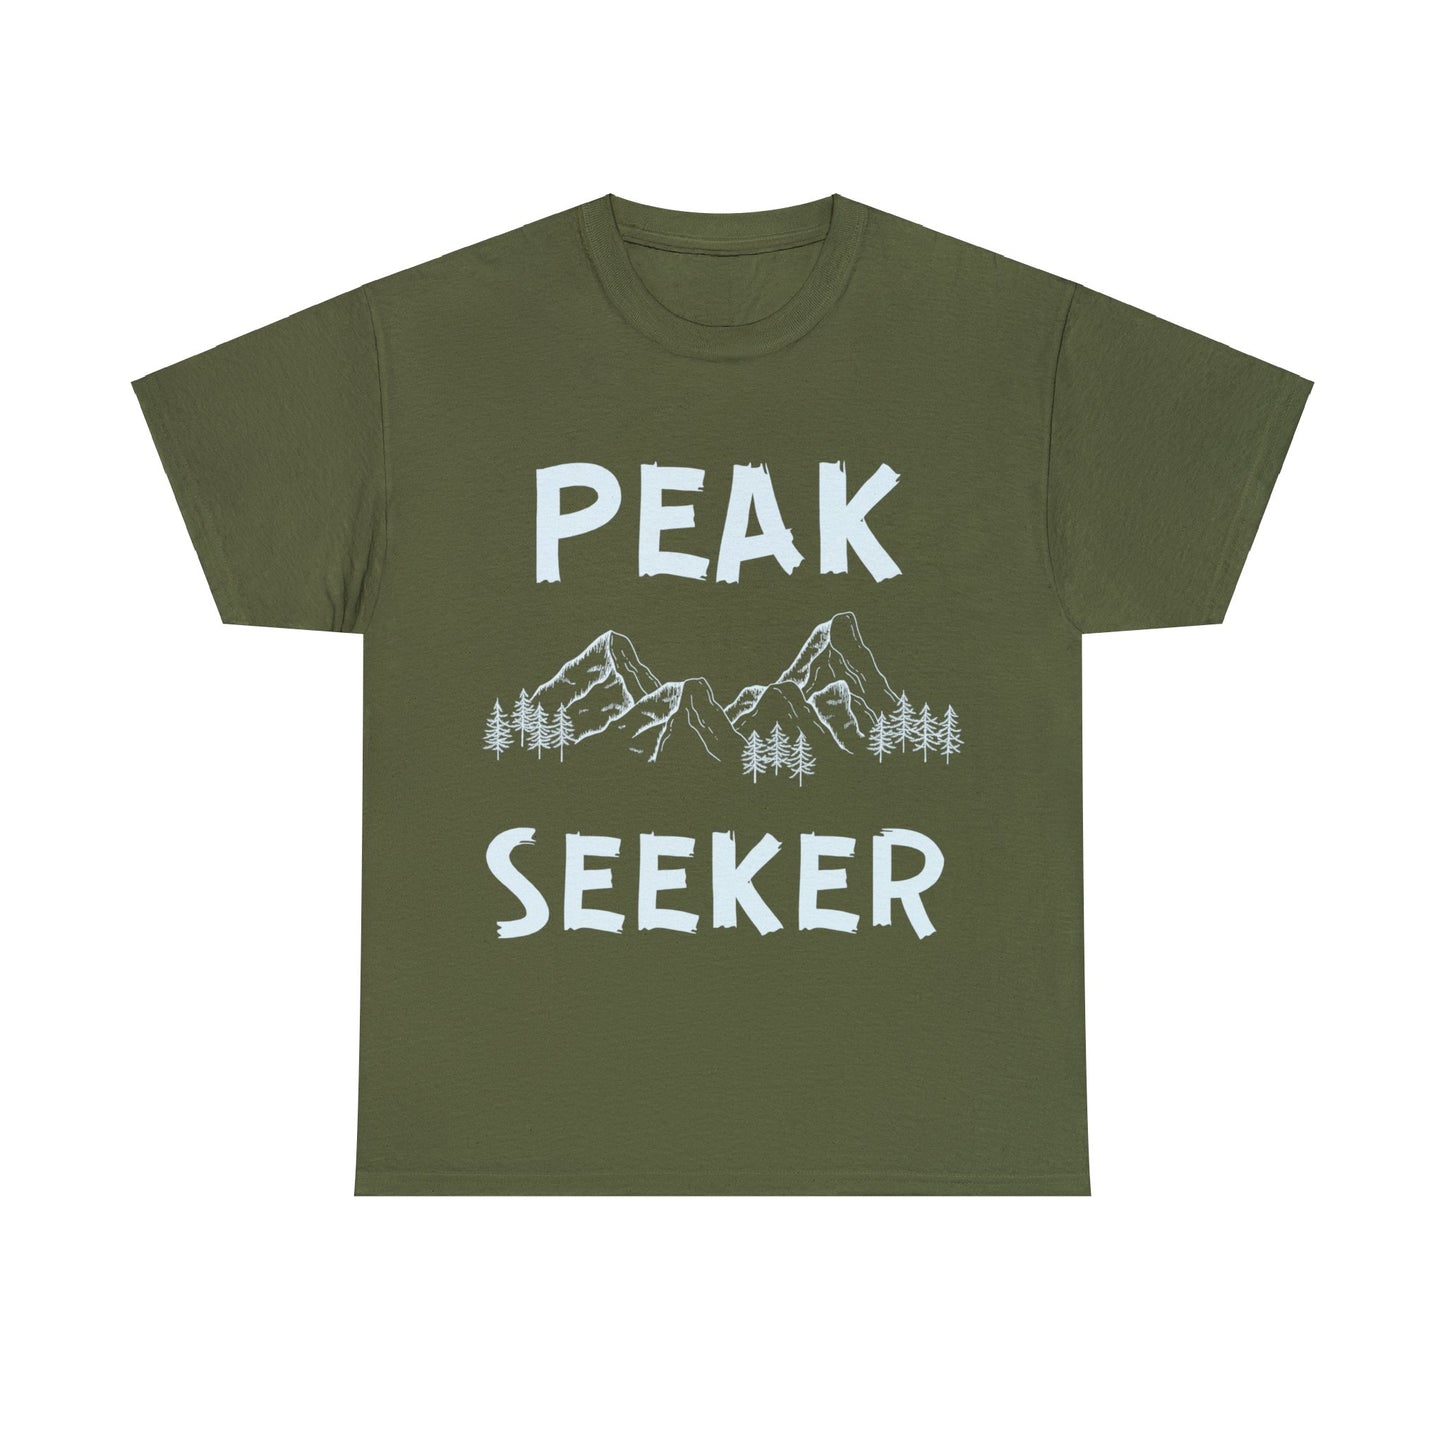 Peak Seeker Loves Mountains - NOT SOLD IN STORES - Hiker, Trekker, Adventurer, Hiking, Trekking, Adventure, Mountain Climber T-Shirt